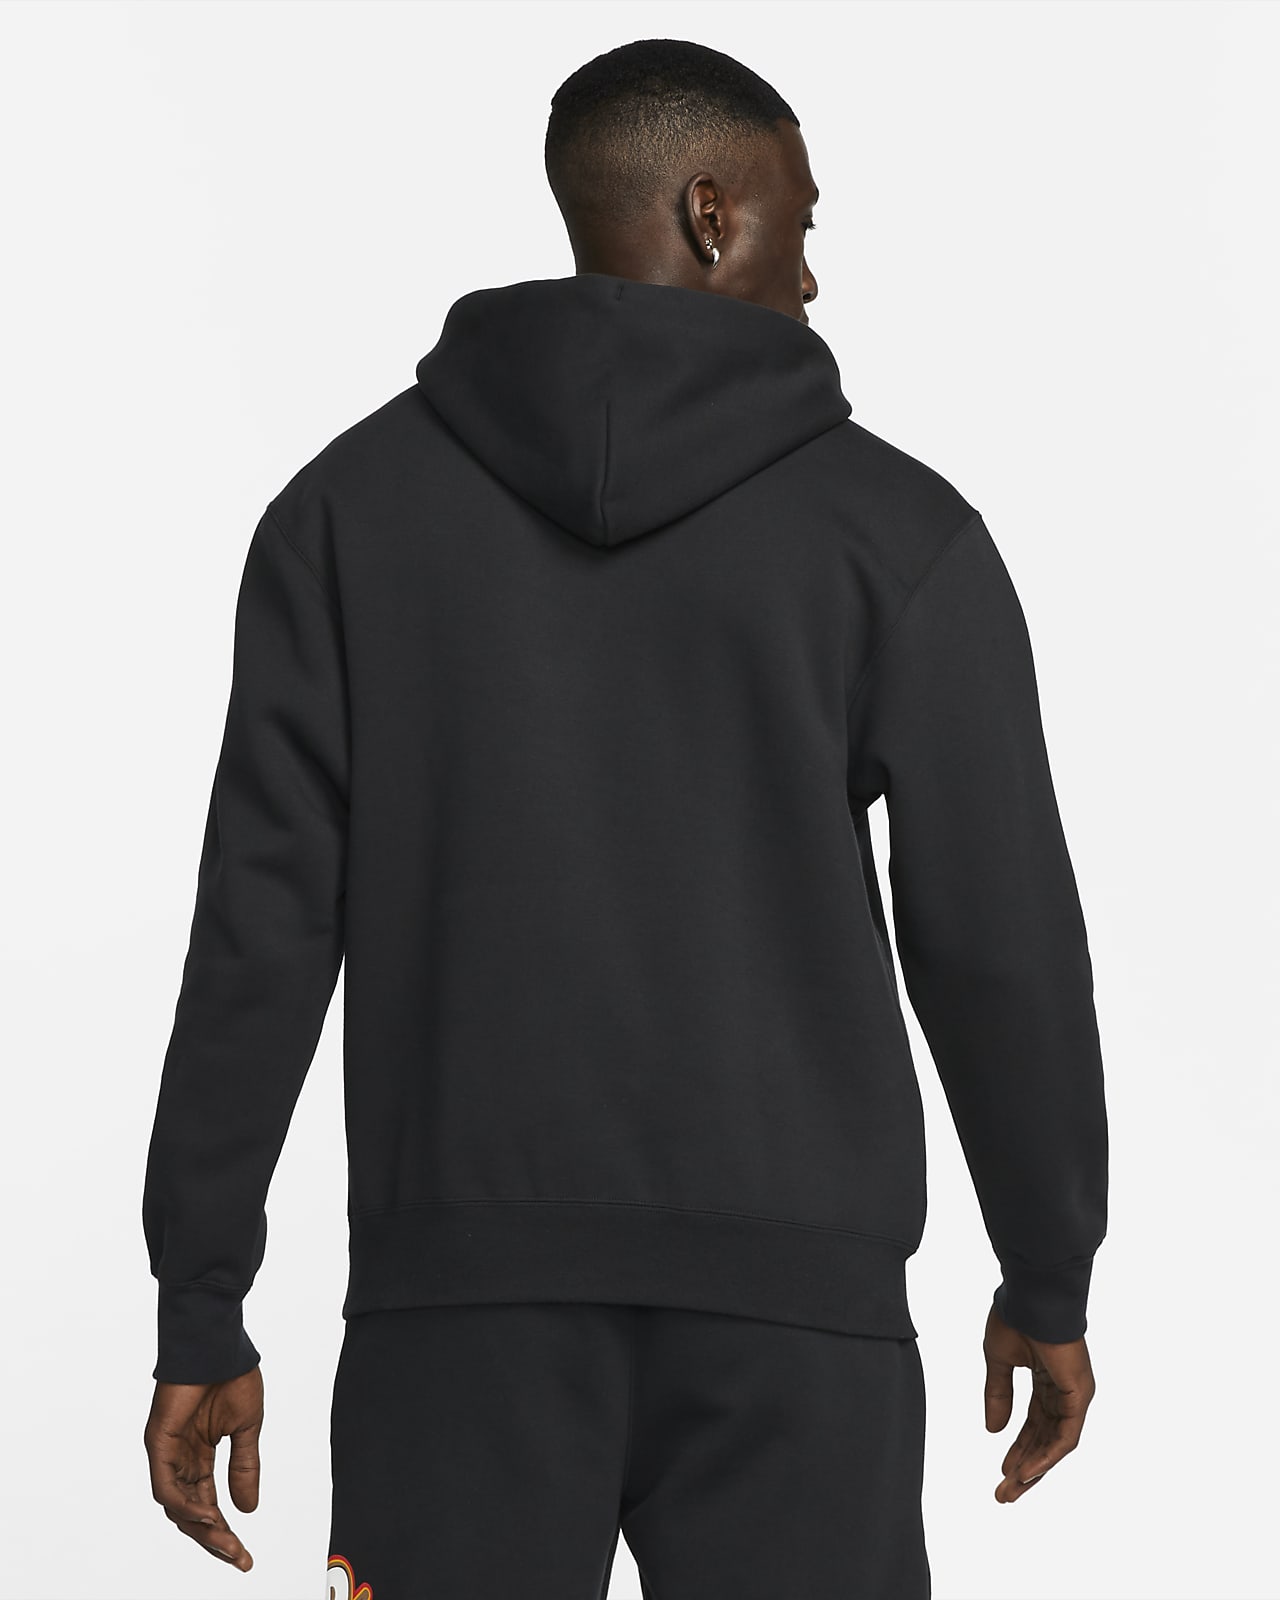 Enfadarse Insignificante Incentivo Jordan Jumpman Men's Fleece Pullover Hoodie. Nike.com